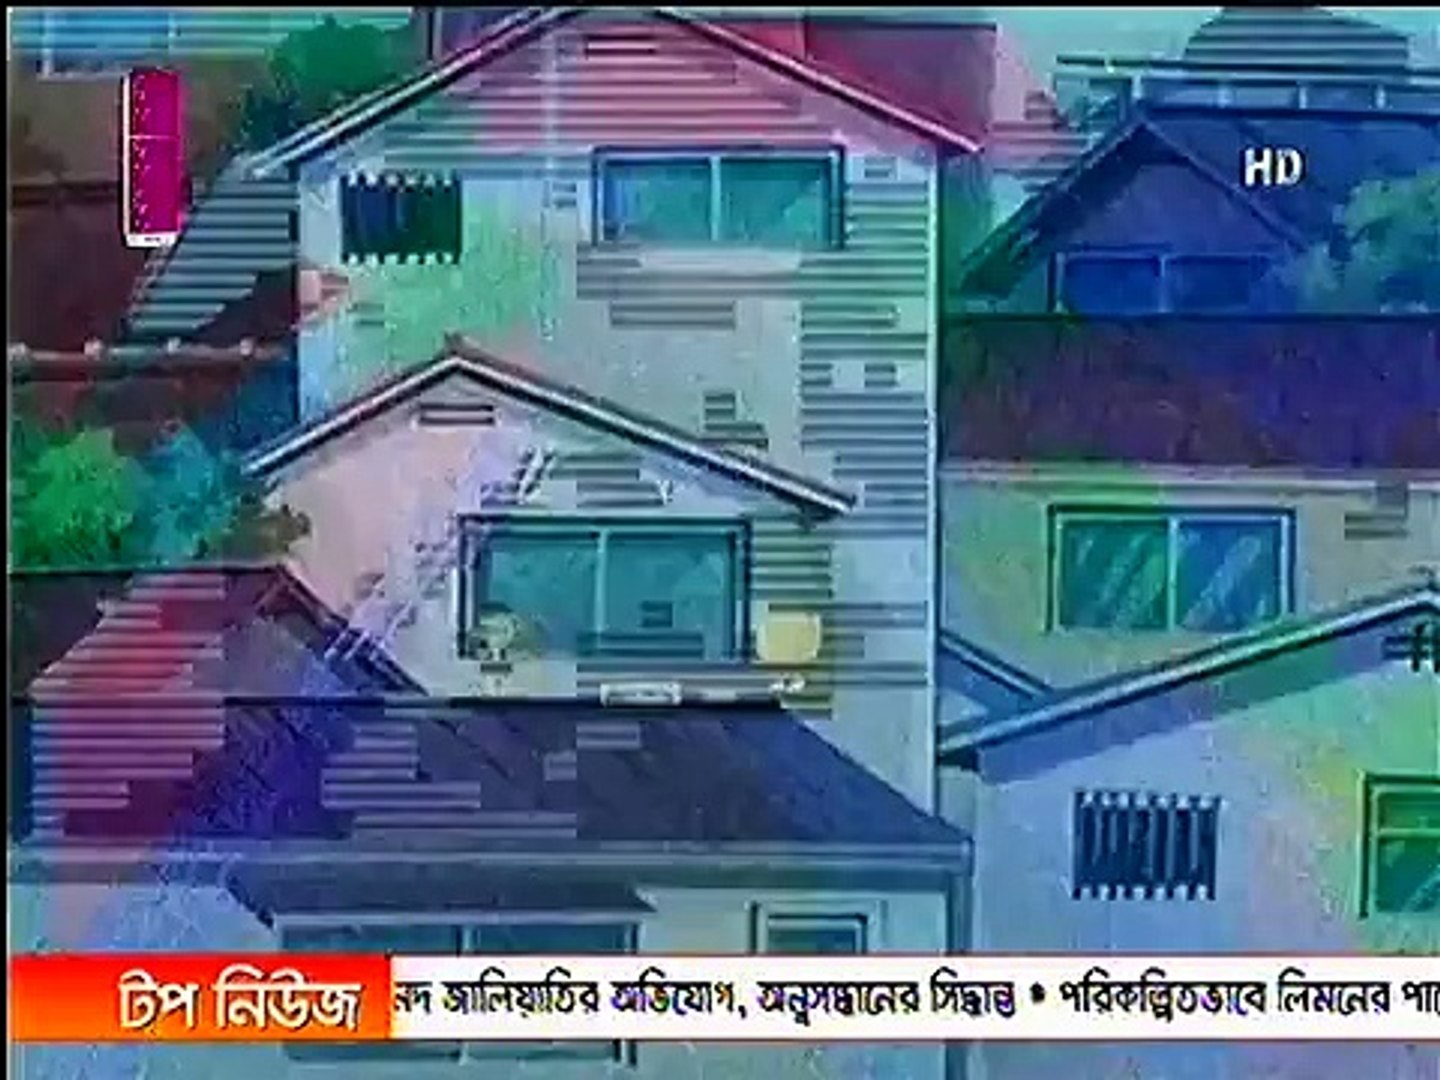 bangla cartoon dorimon sokti 3 program - video Dailymotion